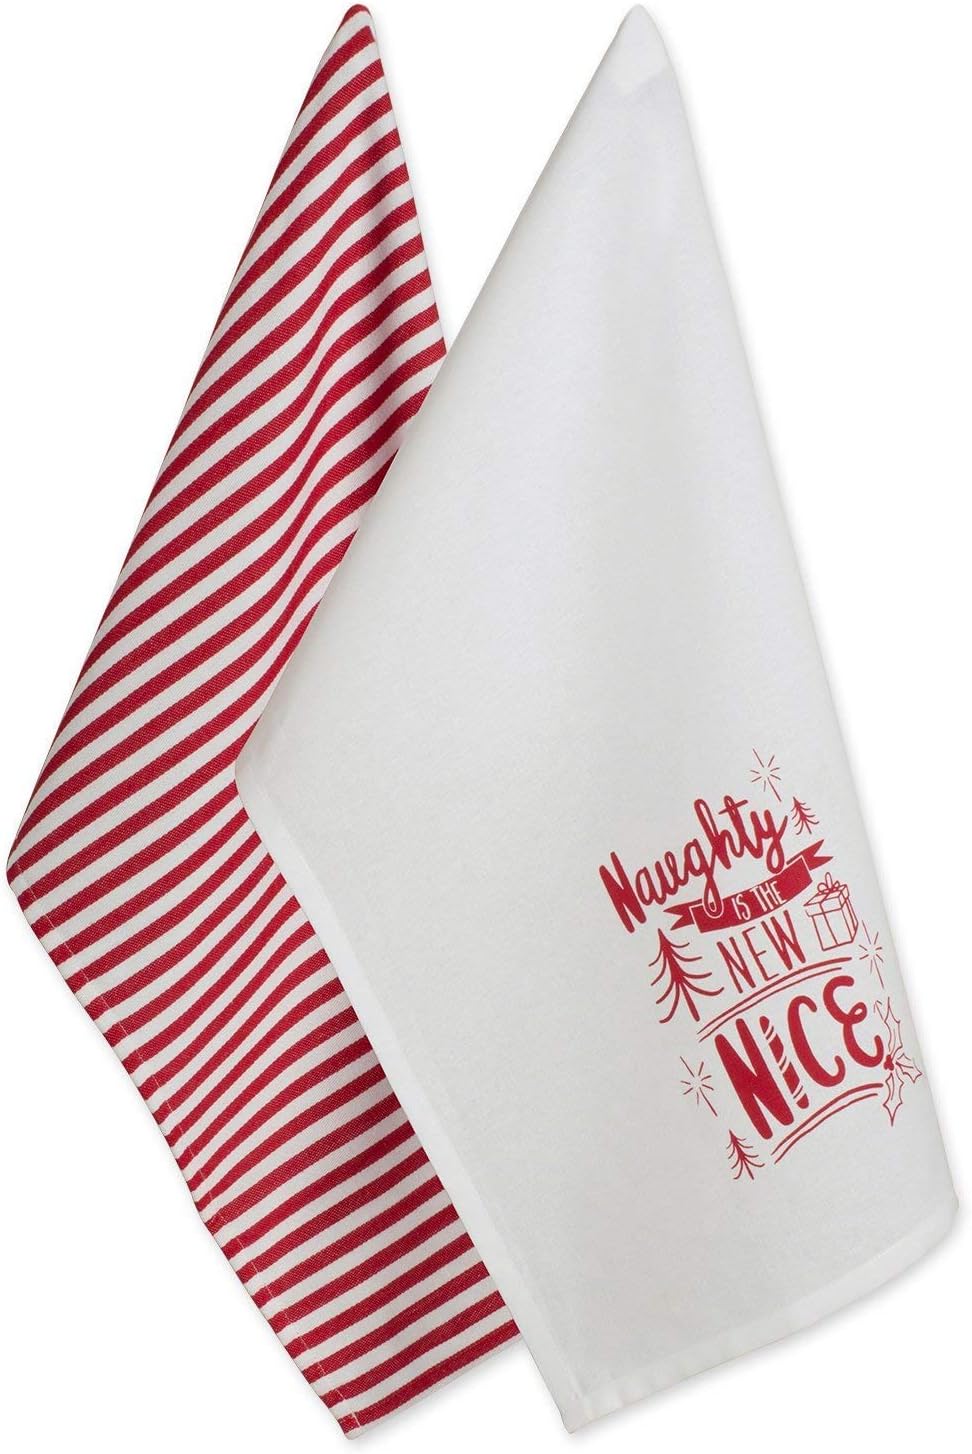 2-Piece Naughty or Nice Christmas Dish Towels Set 100% Cotton Machine Washable